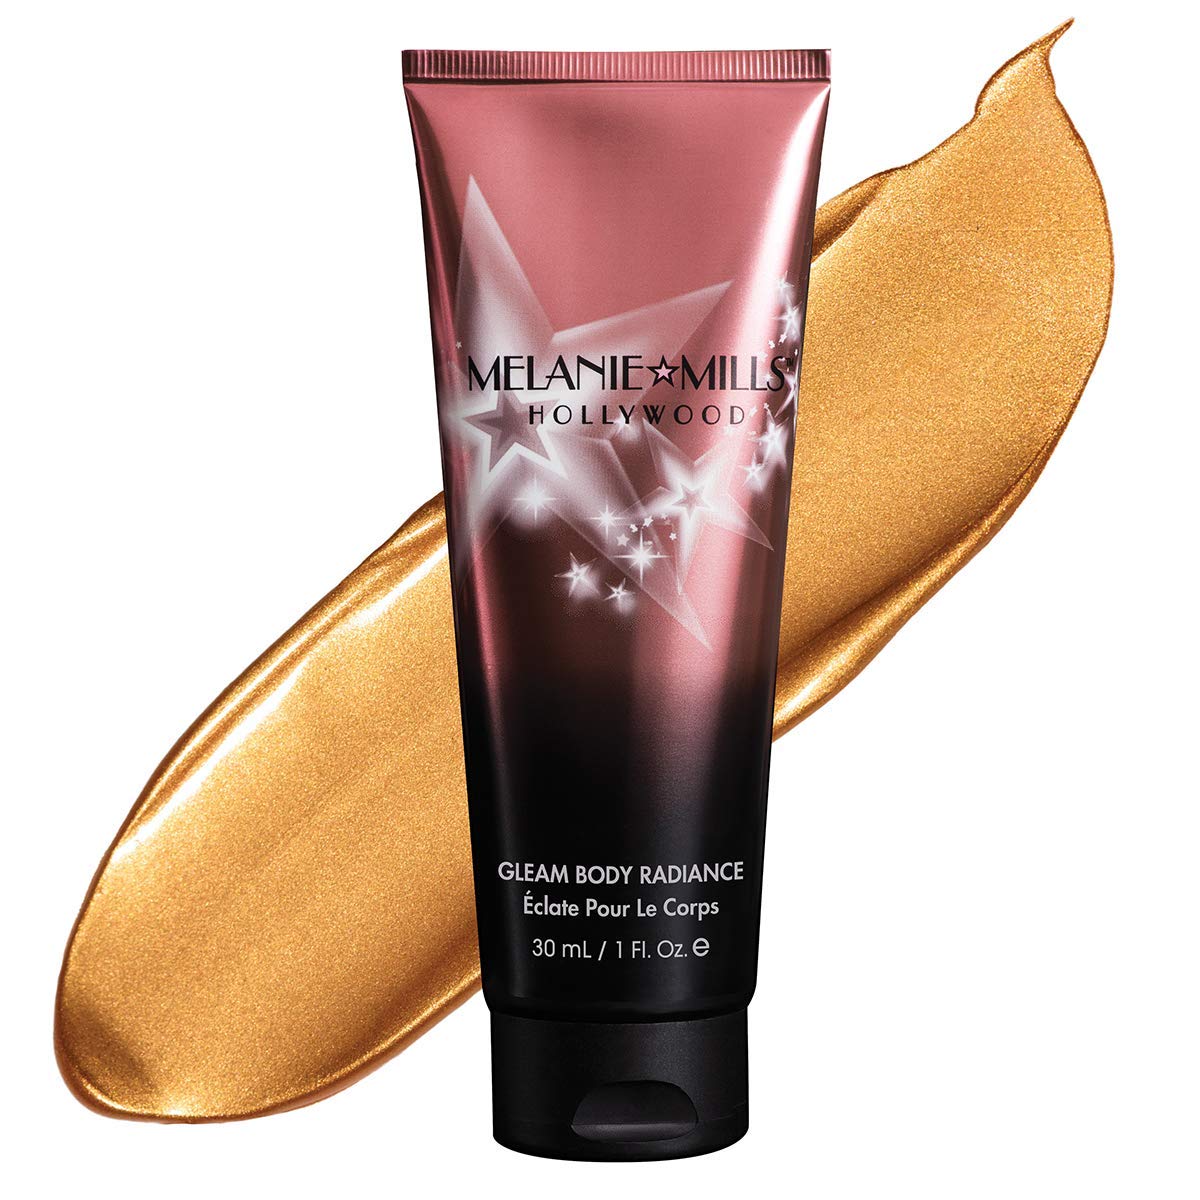 Melanie Mills Hollywood Gleam Body Radiance All In One Makeup, Moisturizer & Glow For Face & Body - Rose Gold, Mini 1 fl.oz.